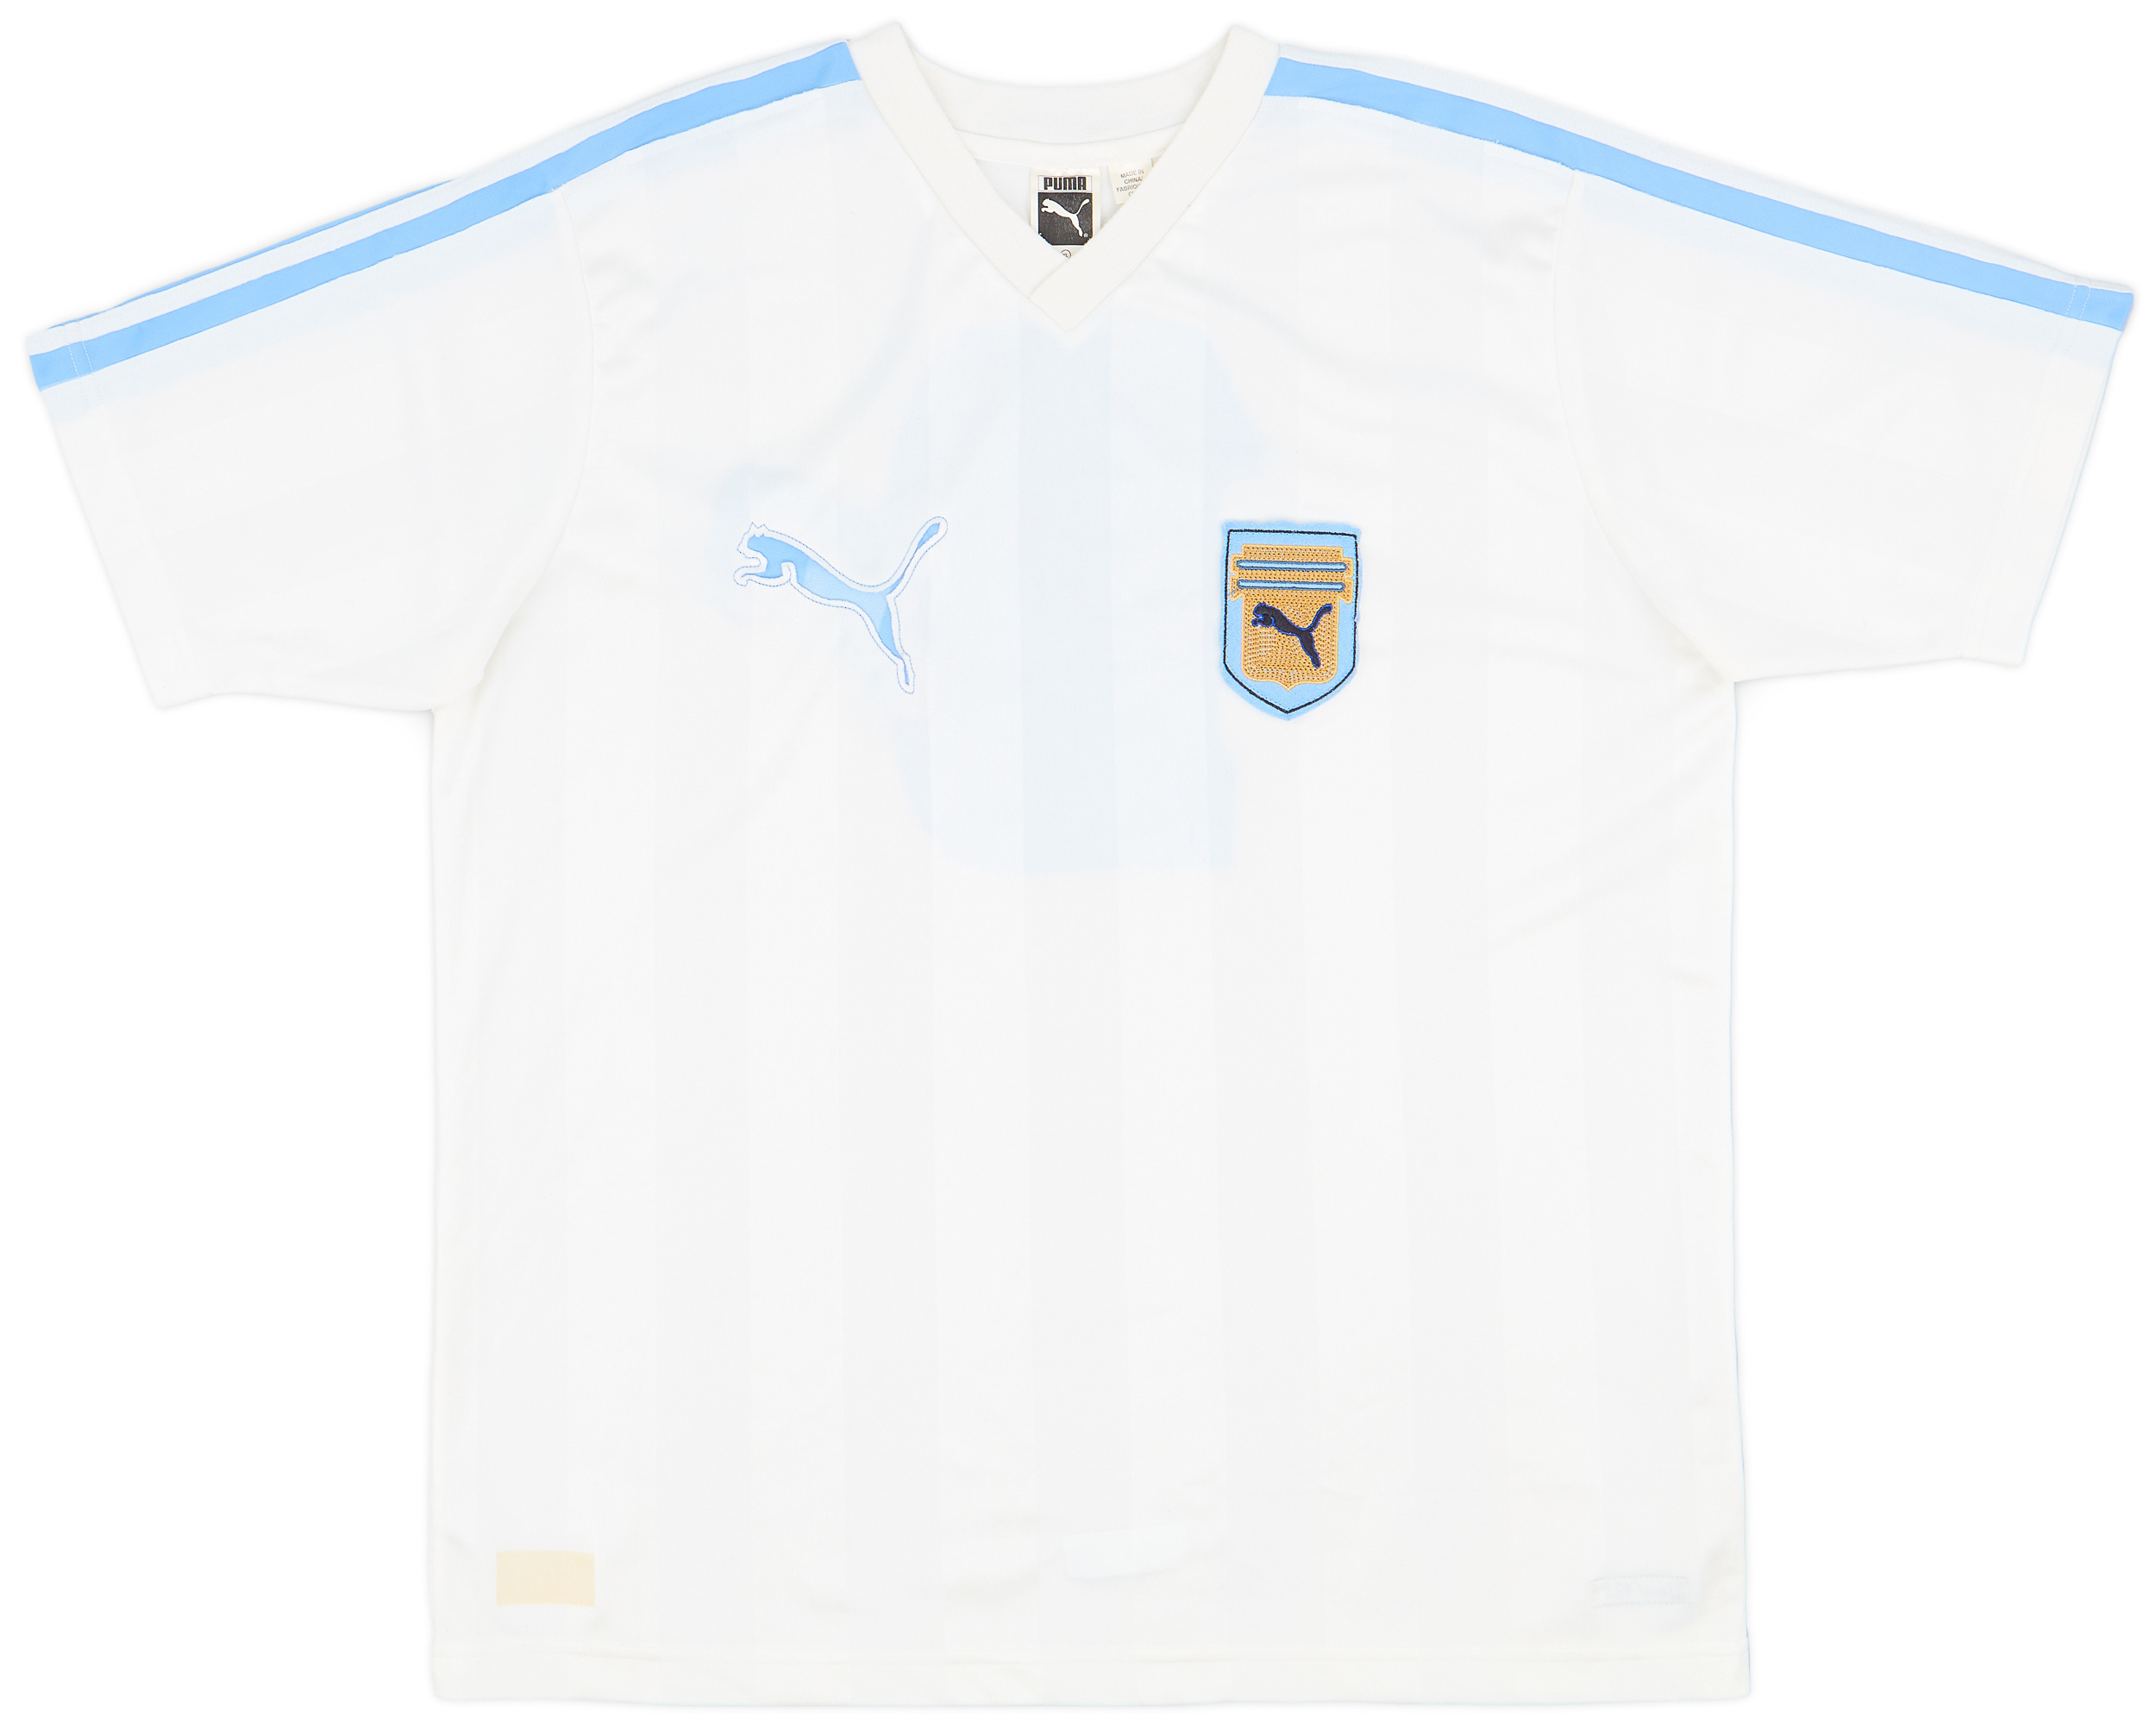 Retro Uruguay Shirt